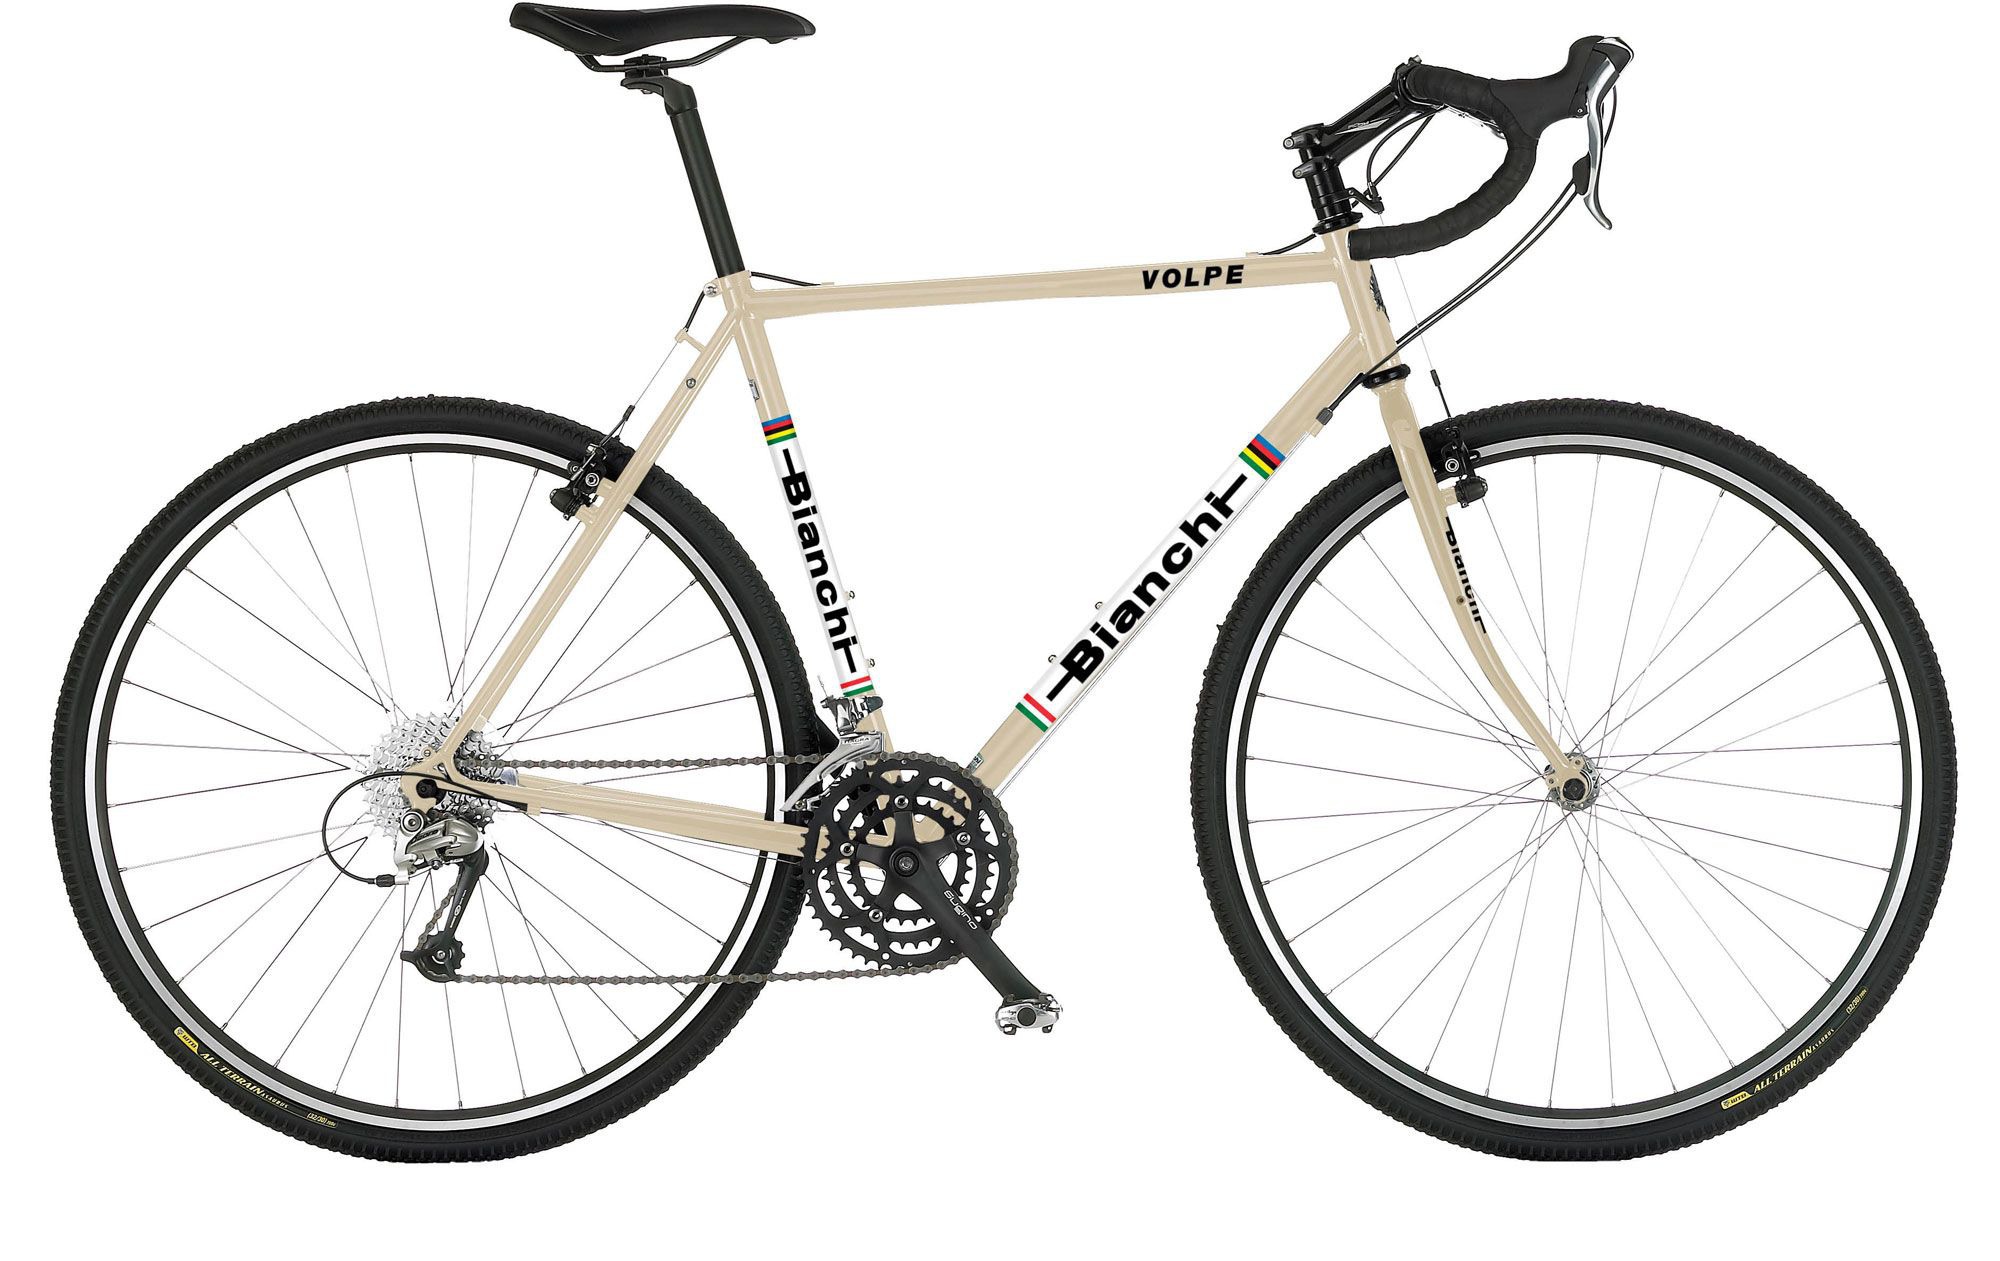 Bianchi Volpe Cross/Touring Bike 49cm Milk/Coffee - Harris Cyclery ...